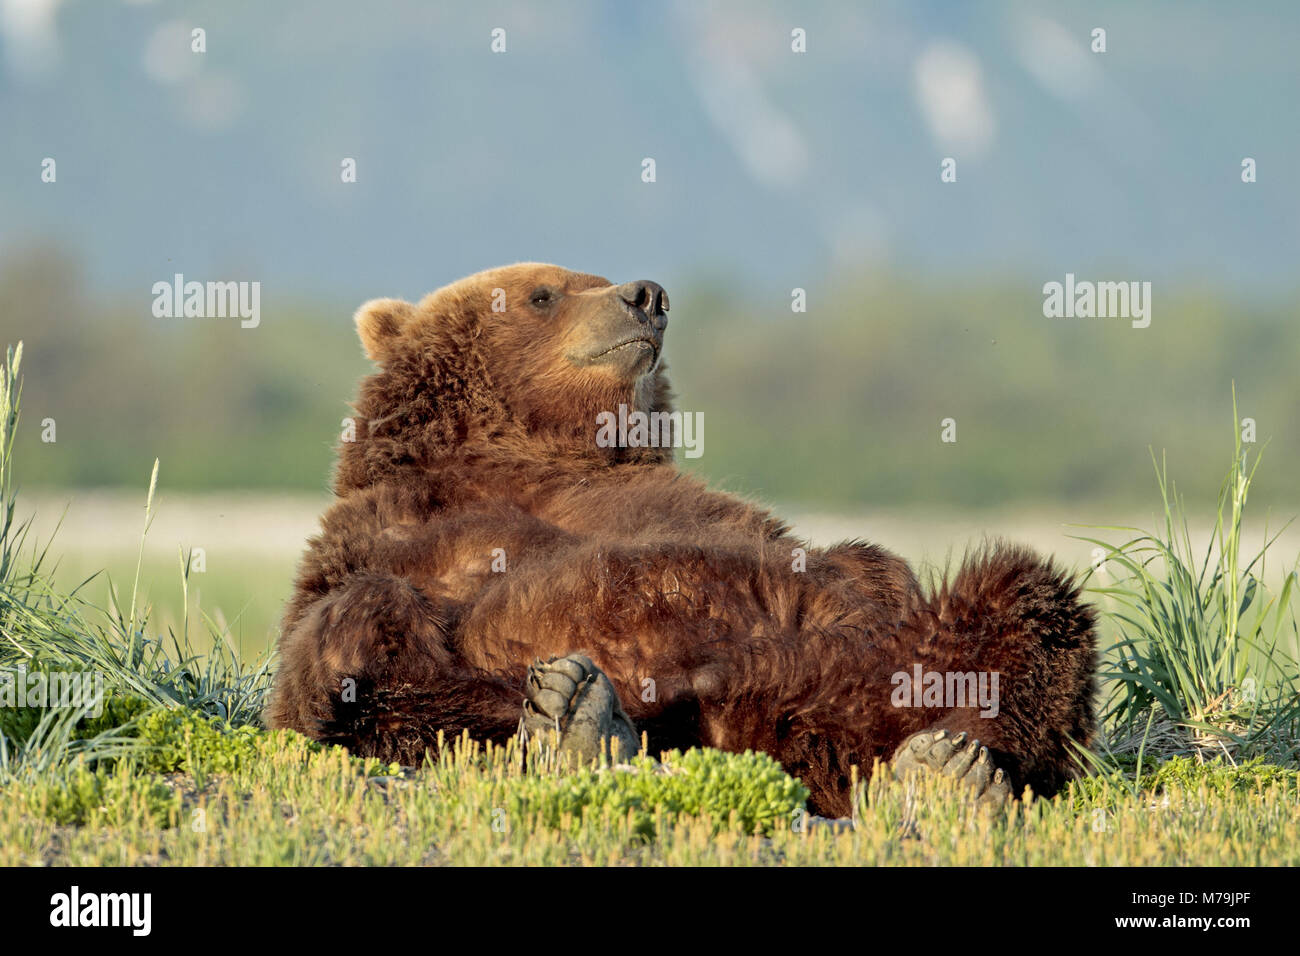 North America, the USA, Alaska, Katmai National Park, Hallo Bay, brown bear, Ursus arctos, Stock Photo